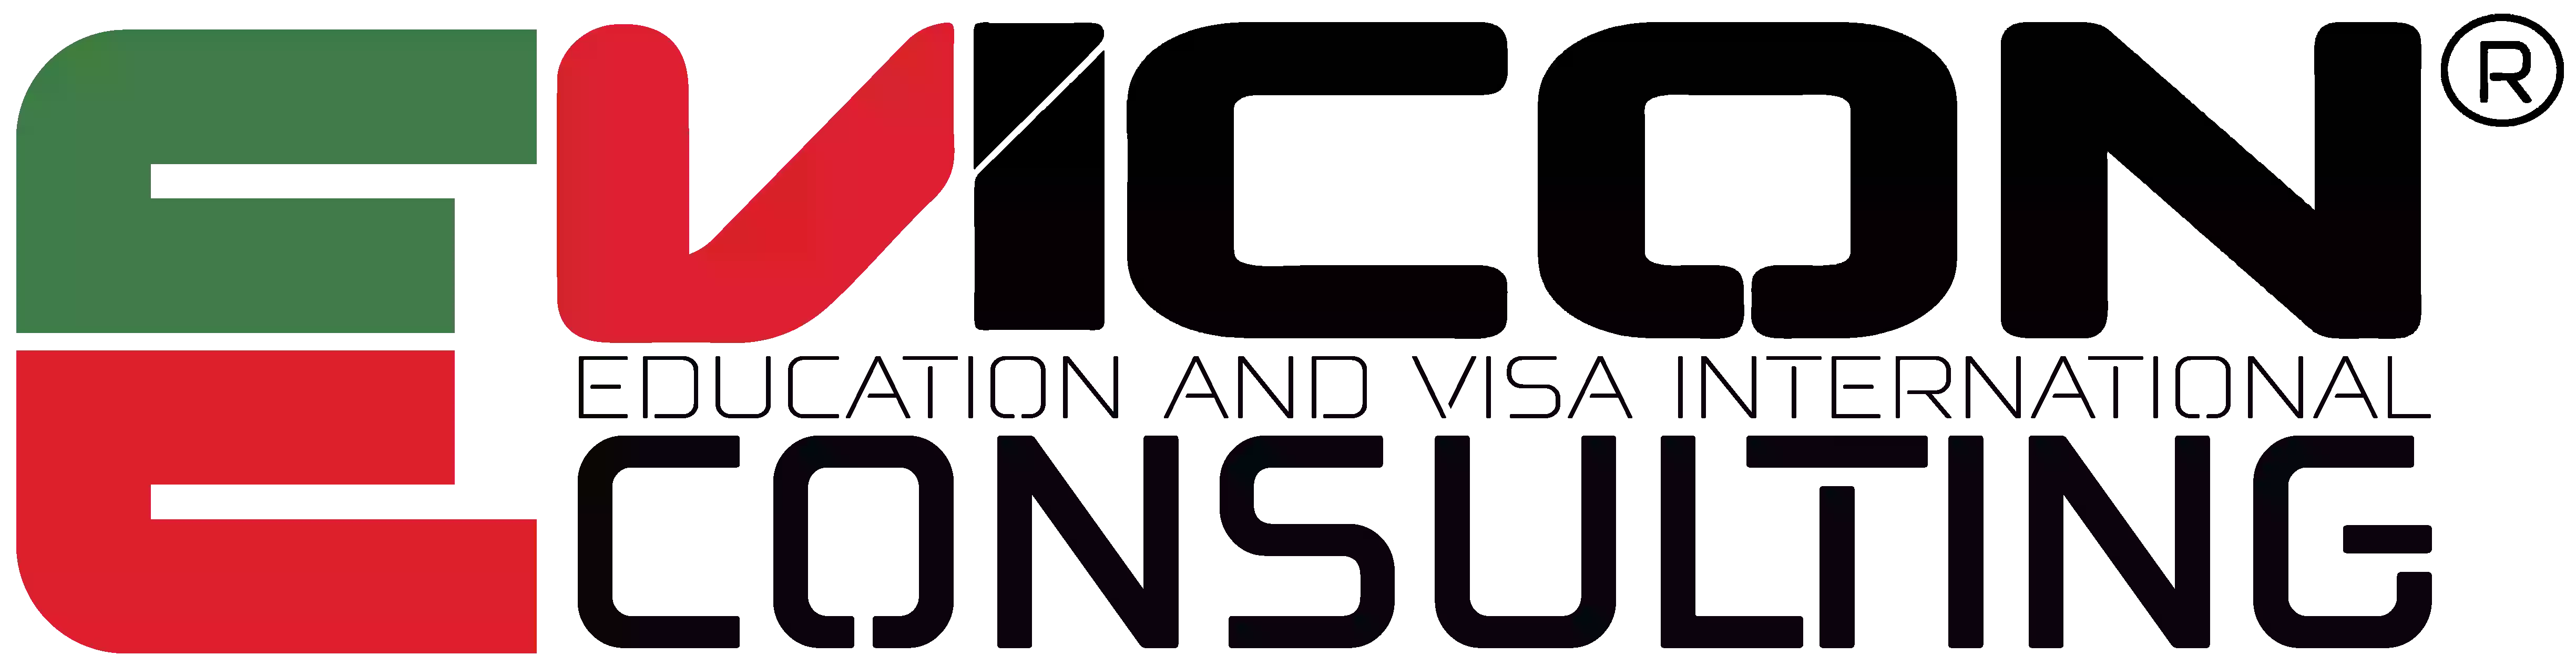 Education and Visa International Consulting (EVICON Australia)